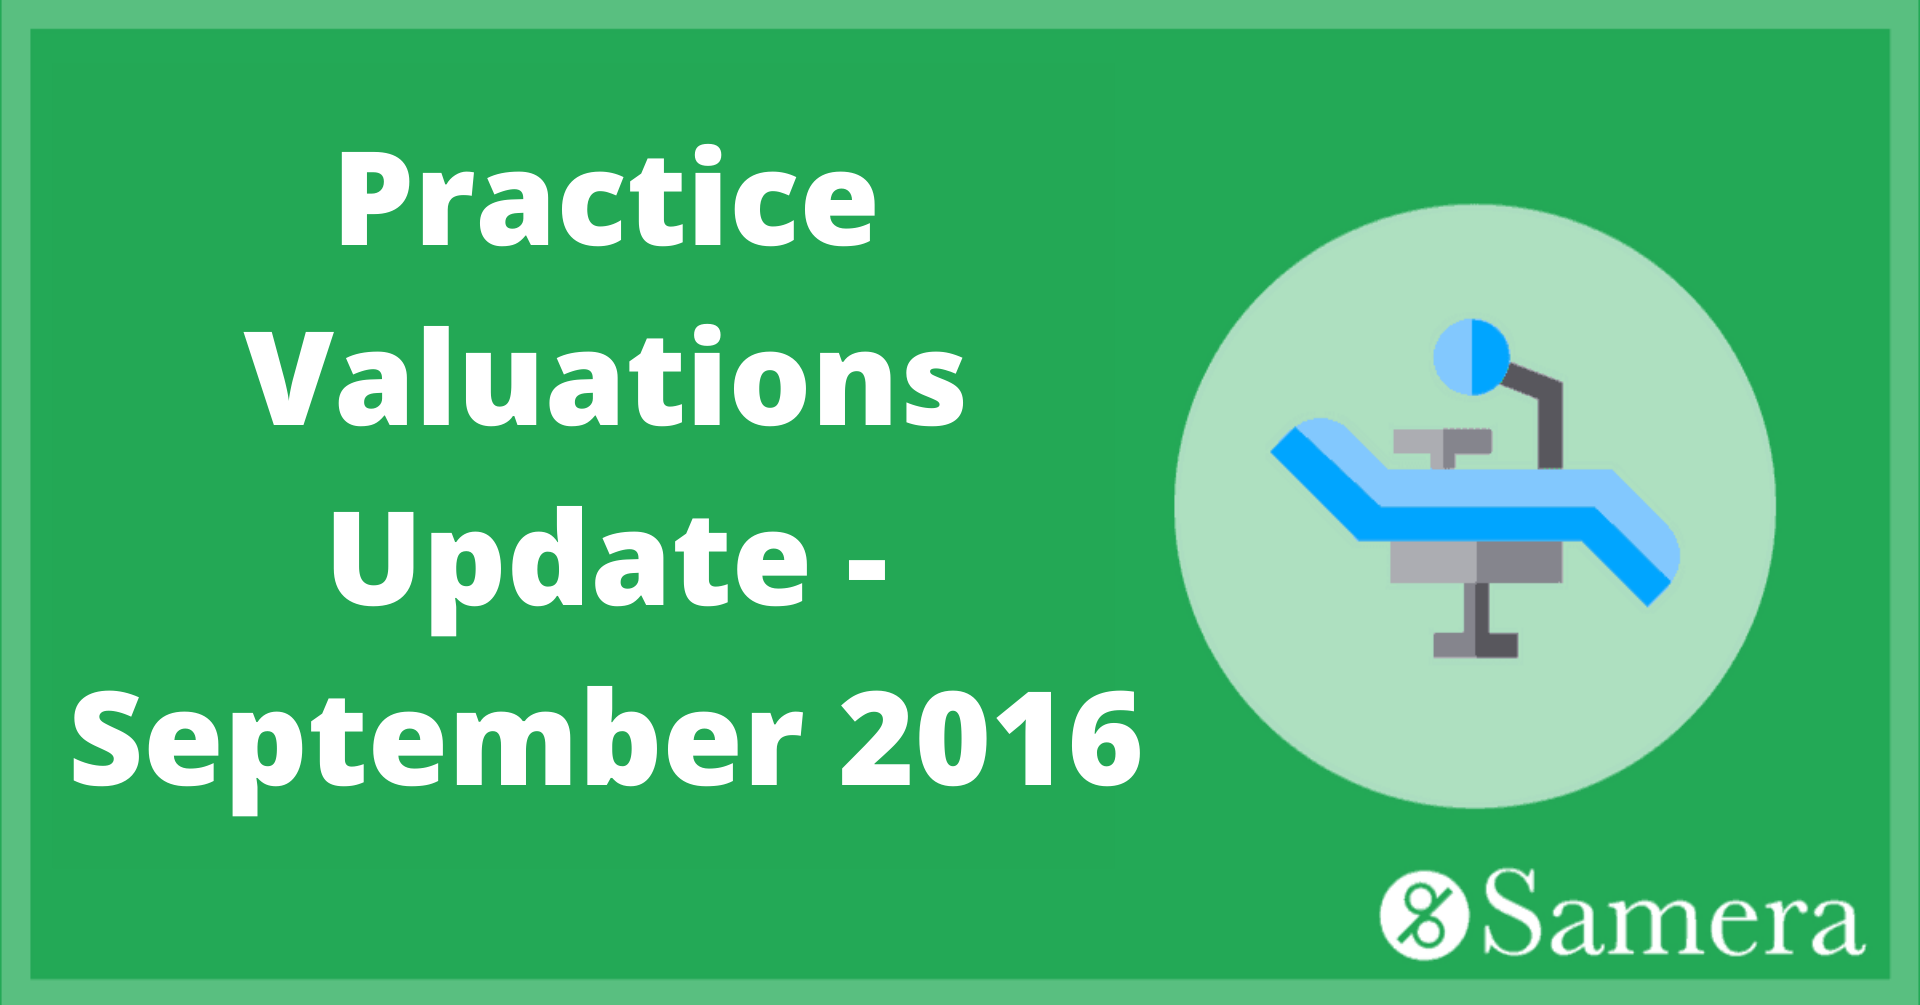 Practice Valuations Update - September 2016